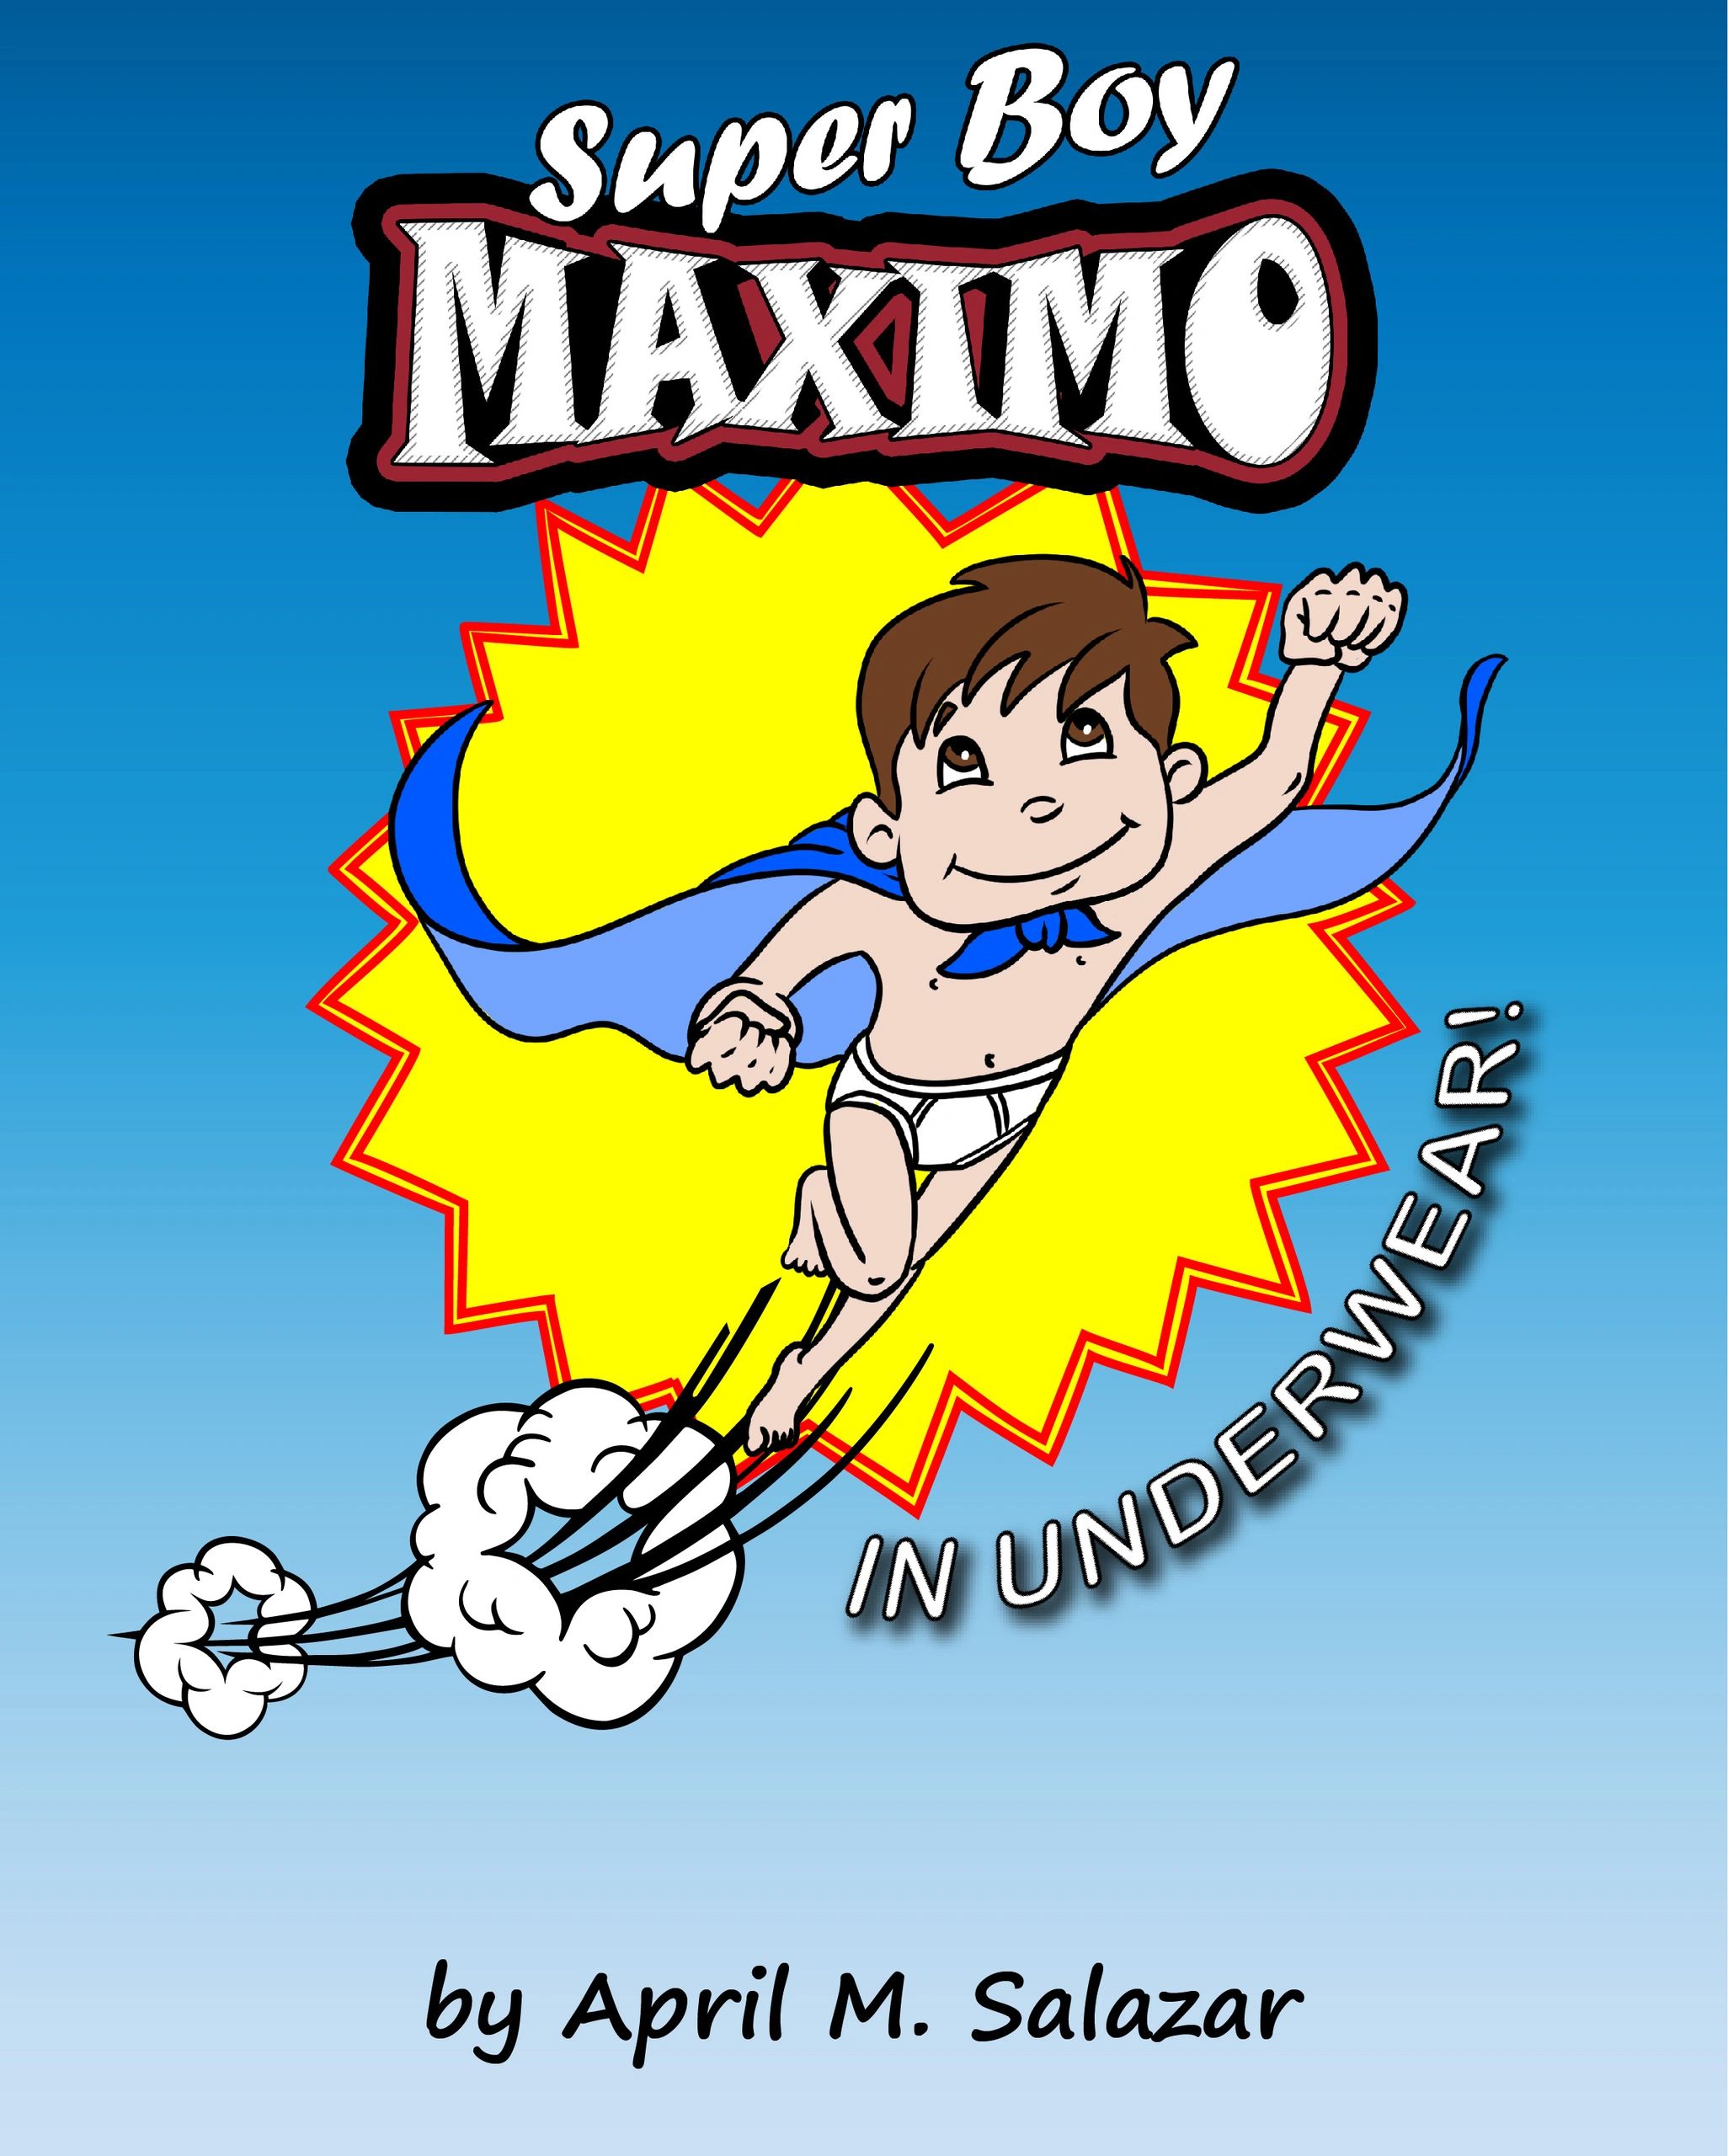 Super Boy Maximo in Underwear!